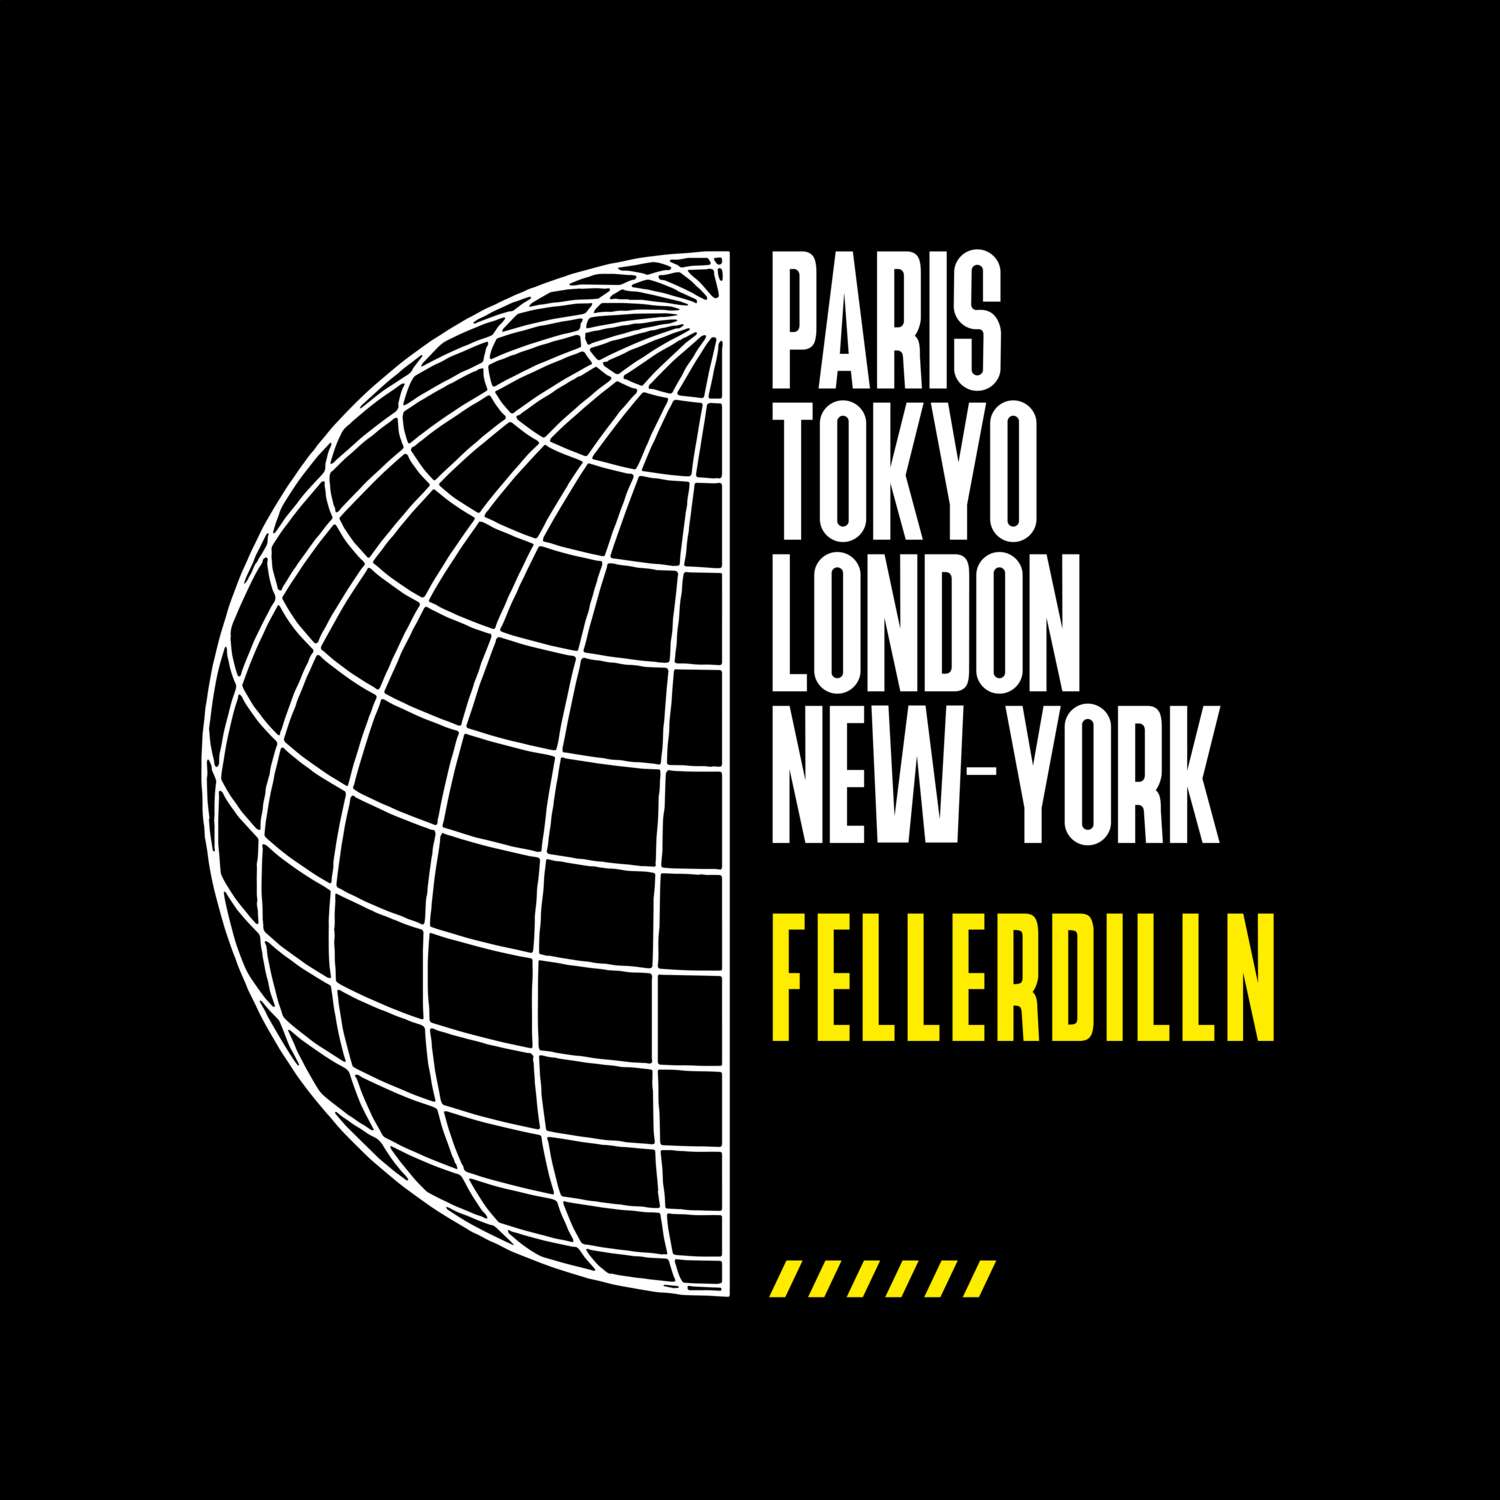 Fellerdilln T-Shirt »Paris Tokyo London«